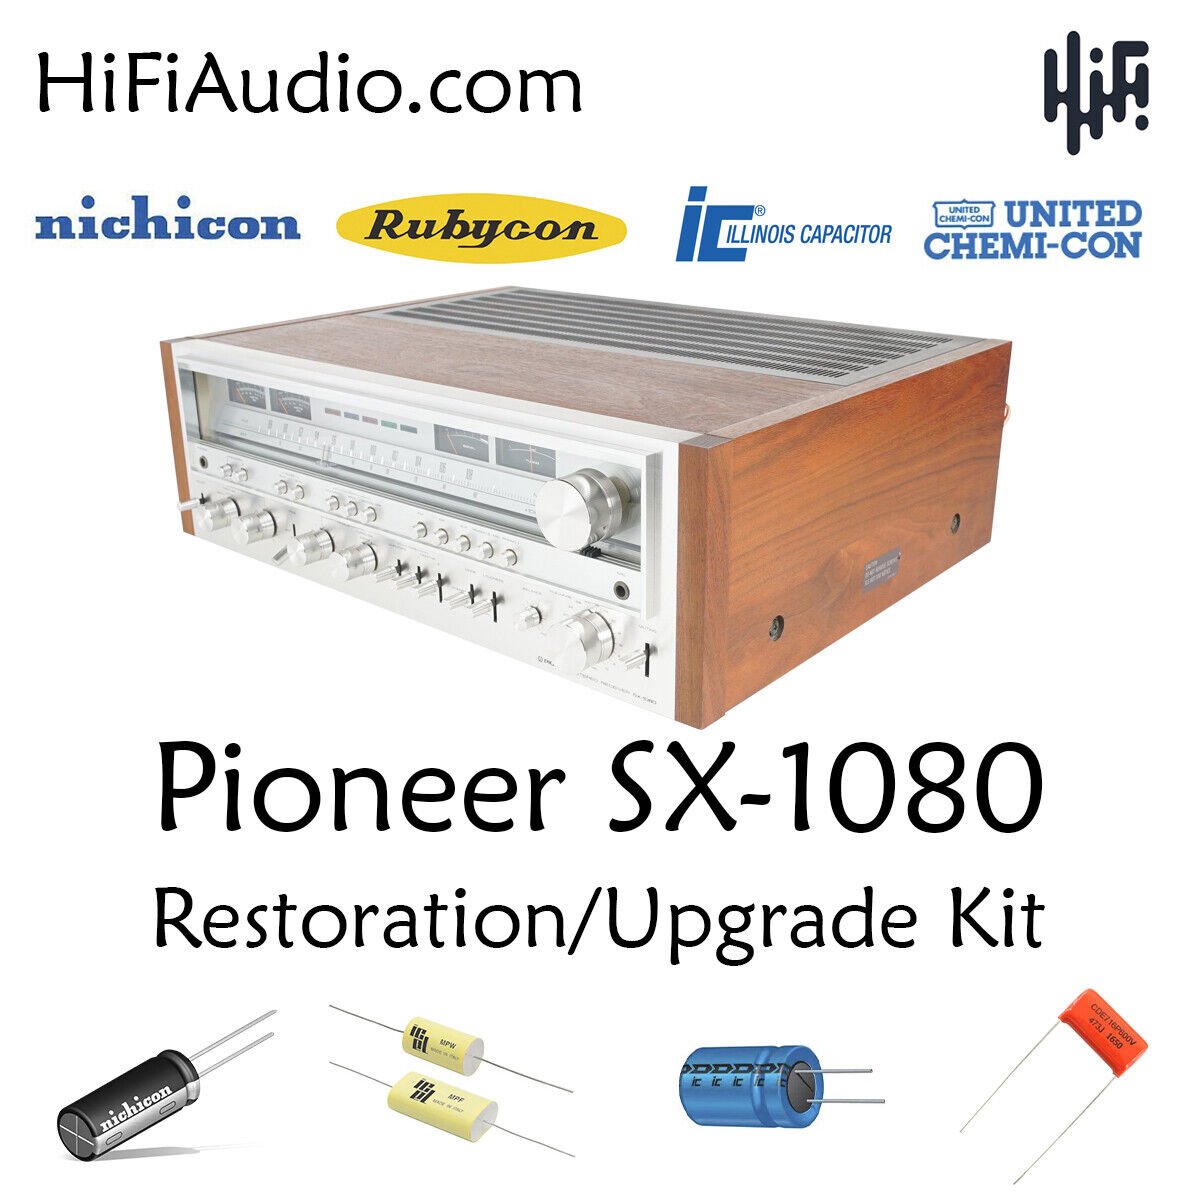 Buy Pioneer SX-1080 restoration kit HiFi Audio